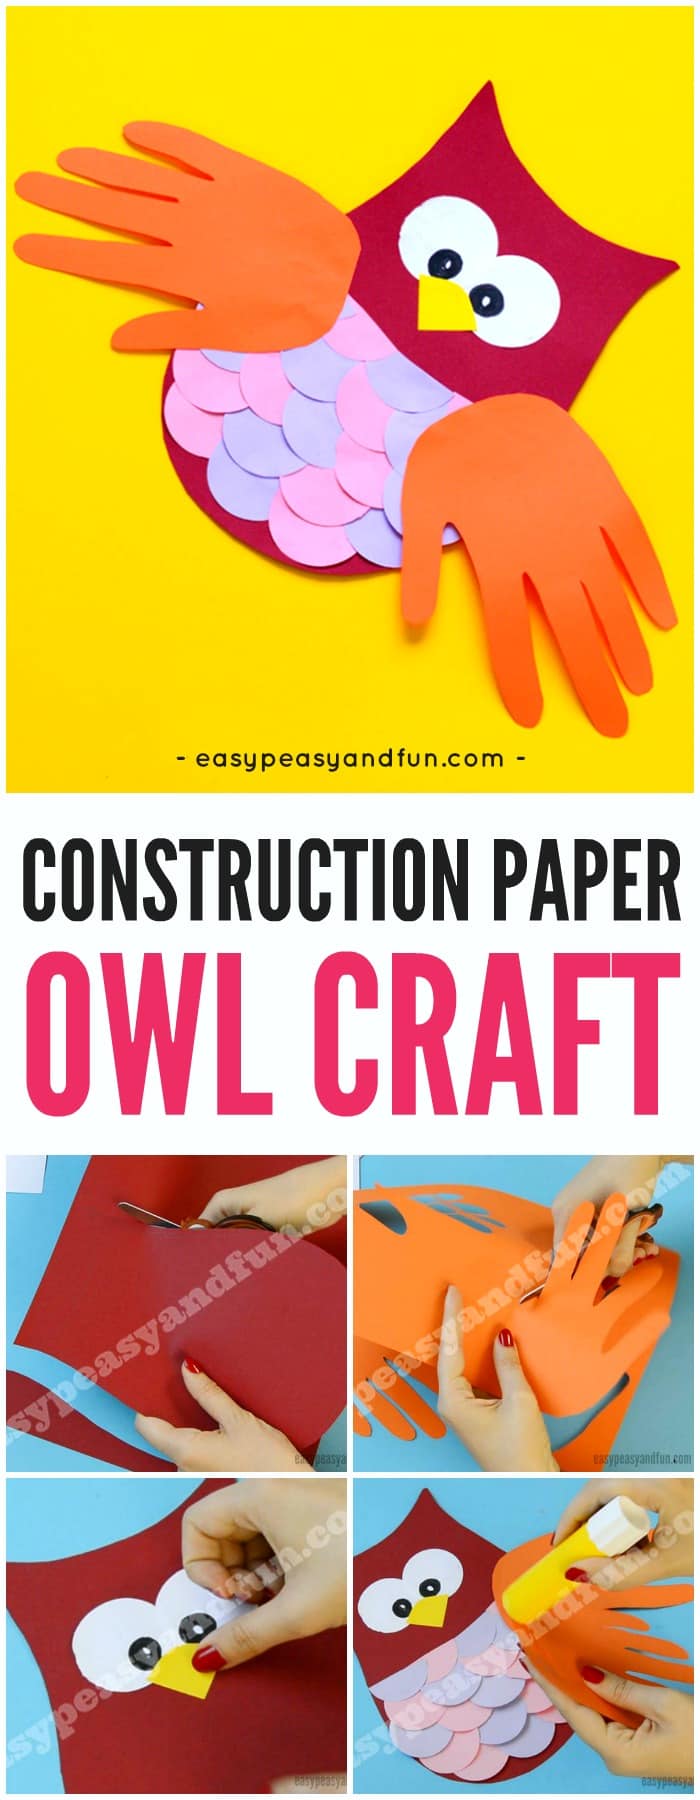 Construction Paper Owl Craft